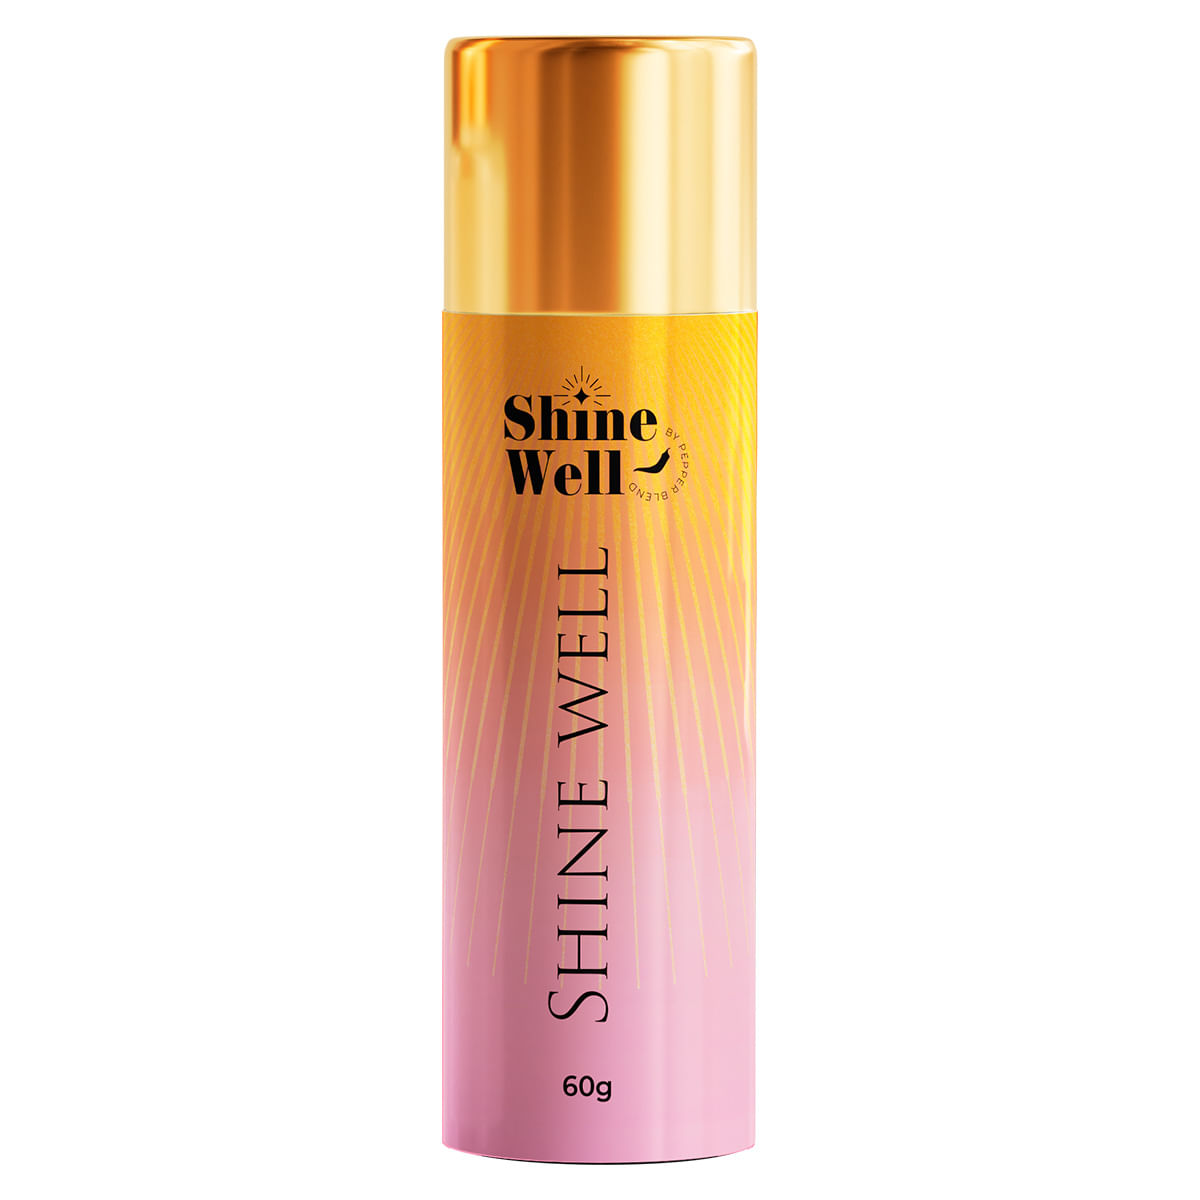 Shine Well Desodorante Intimo Feminino 60g/110ml Linha Shine Well Pepper Blend